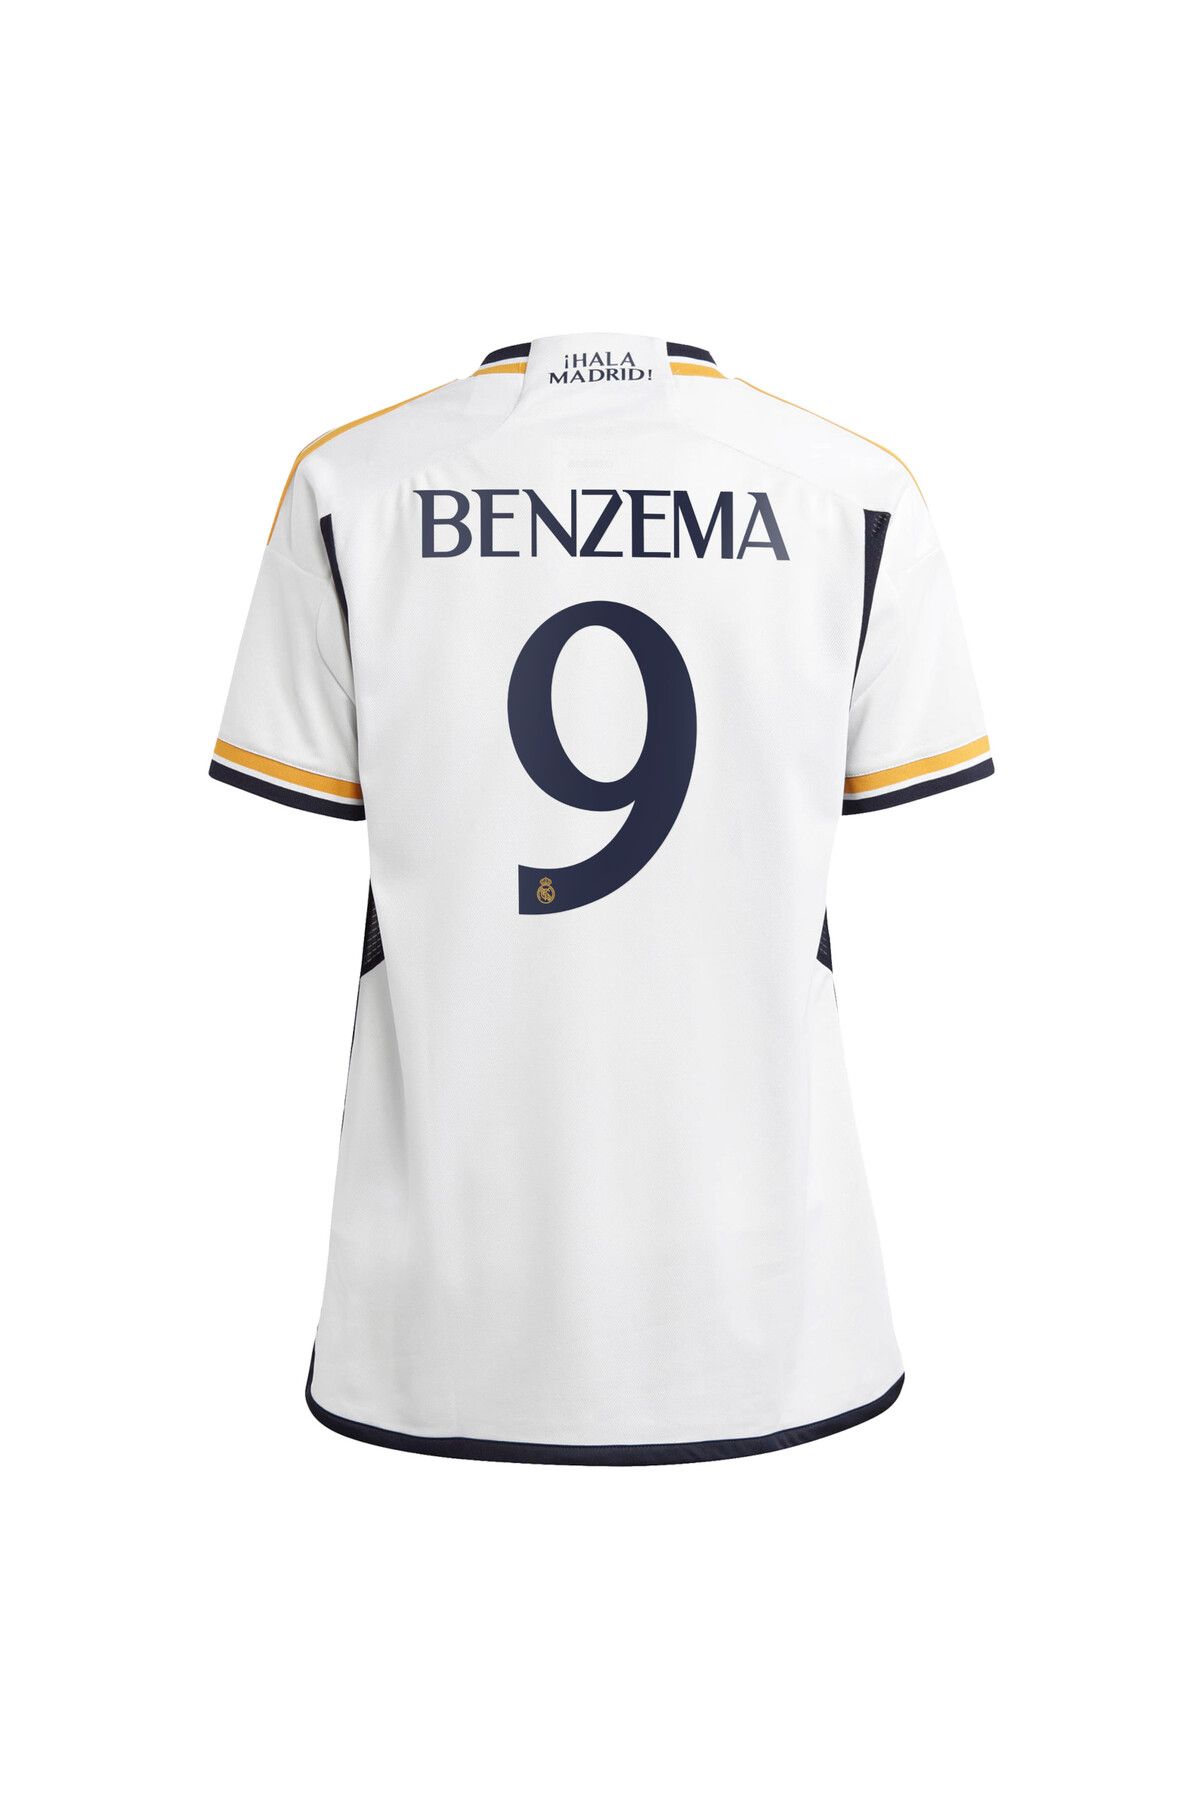 ZİLONG Real Madrid Benzema 9 Numara 2023/24 Sezon Yetişkin Futbol Forması